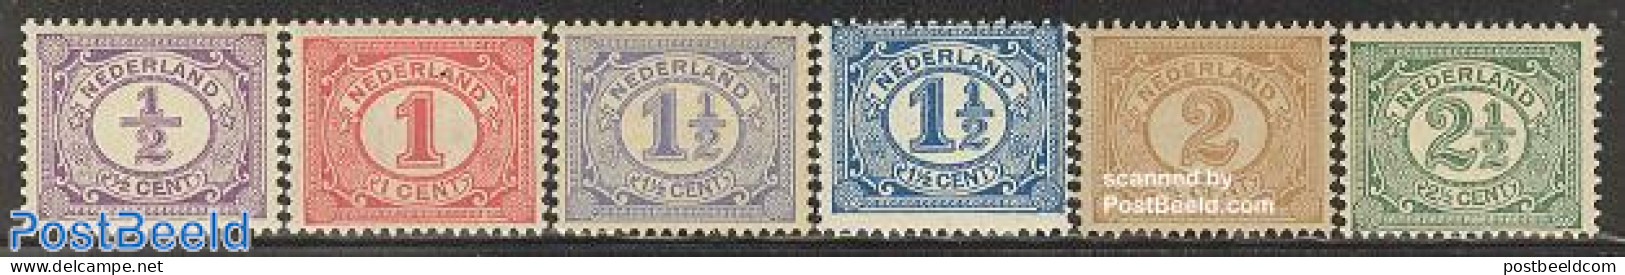 Netherlands 1899 Definitives 6v, Unused (hinged) - Unused Stamps